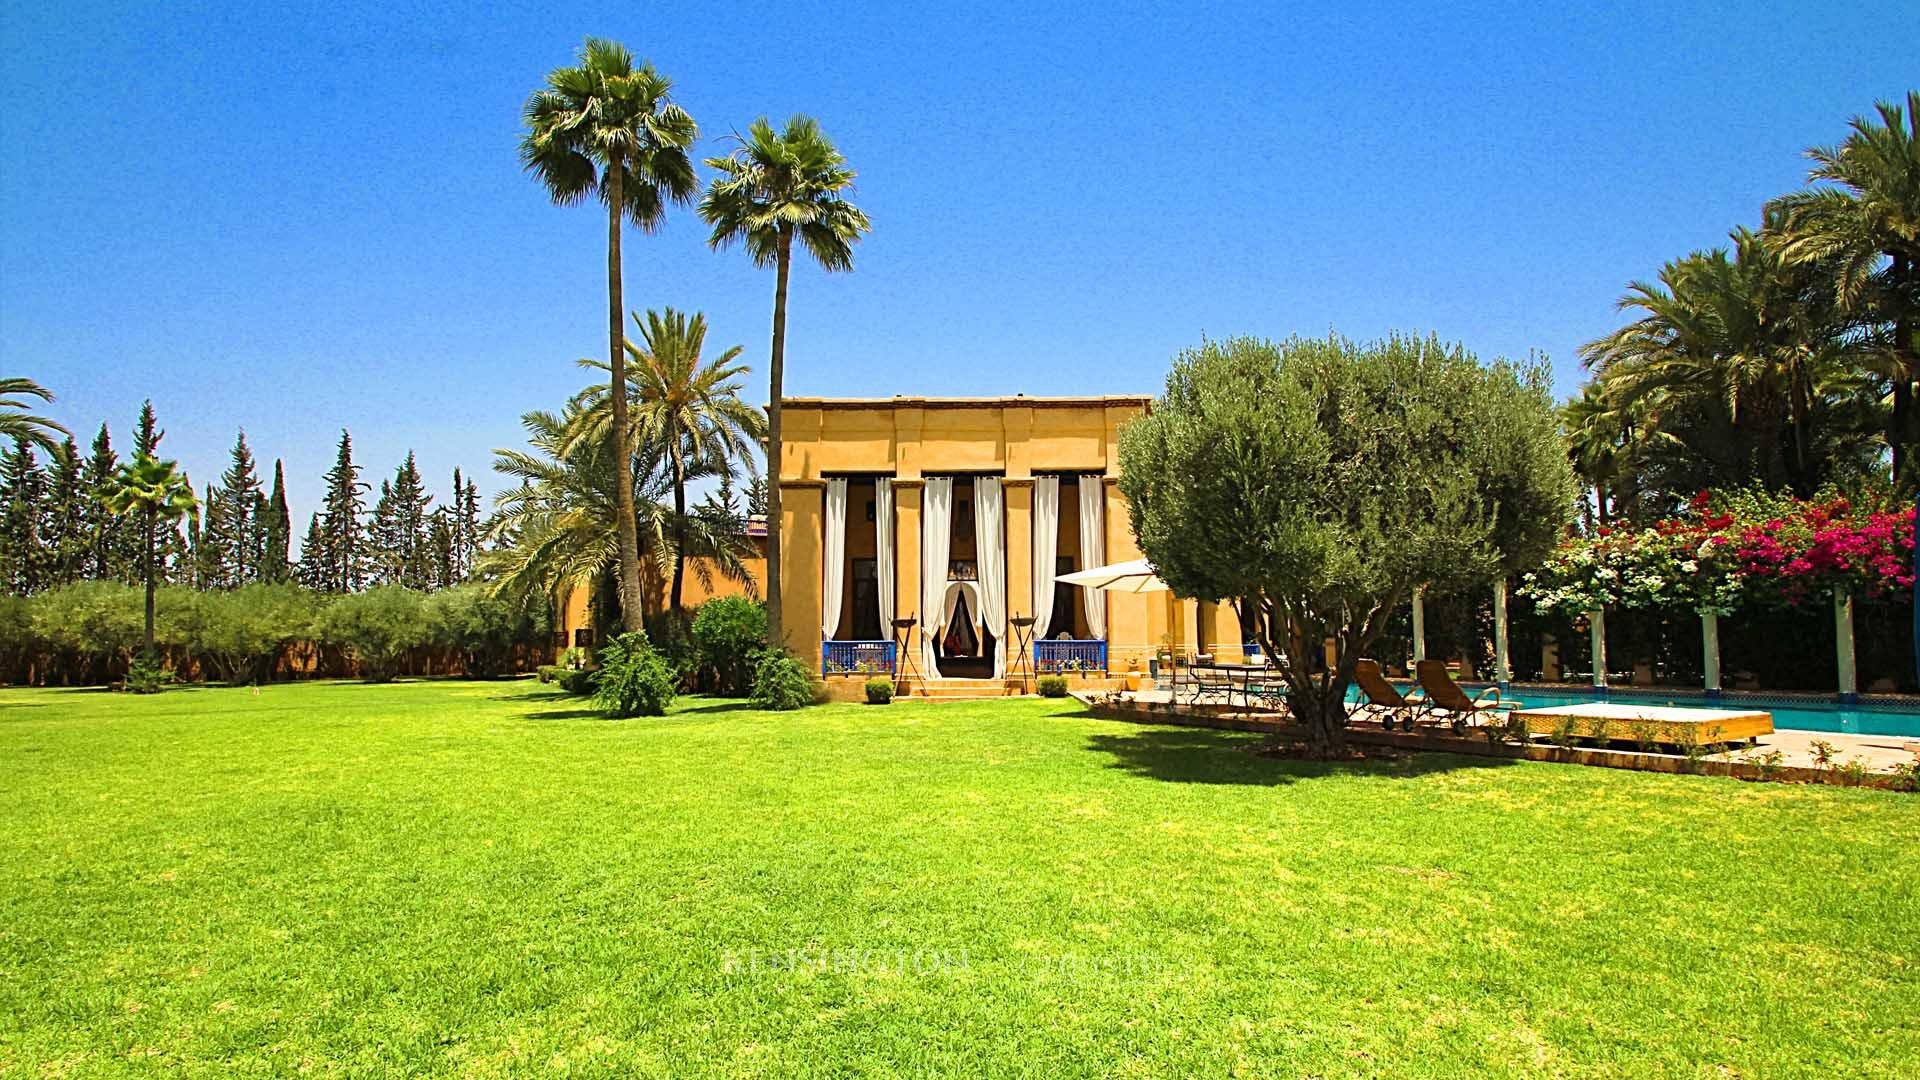 Villa Oska in Marrakech, Morocco